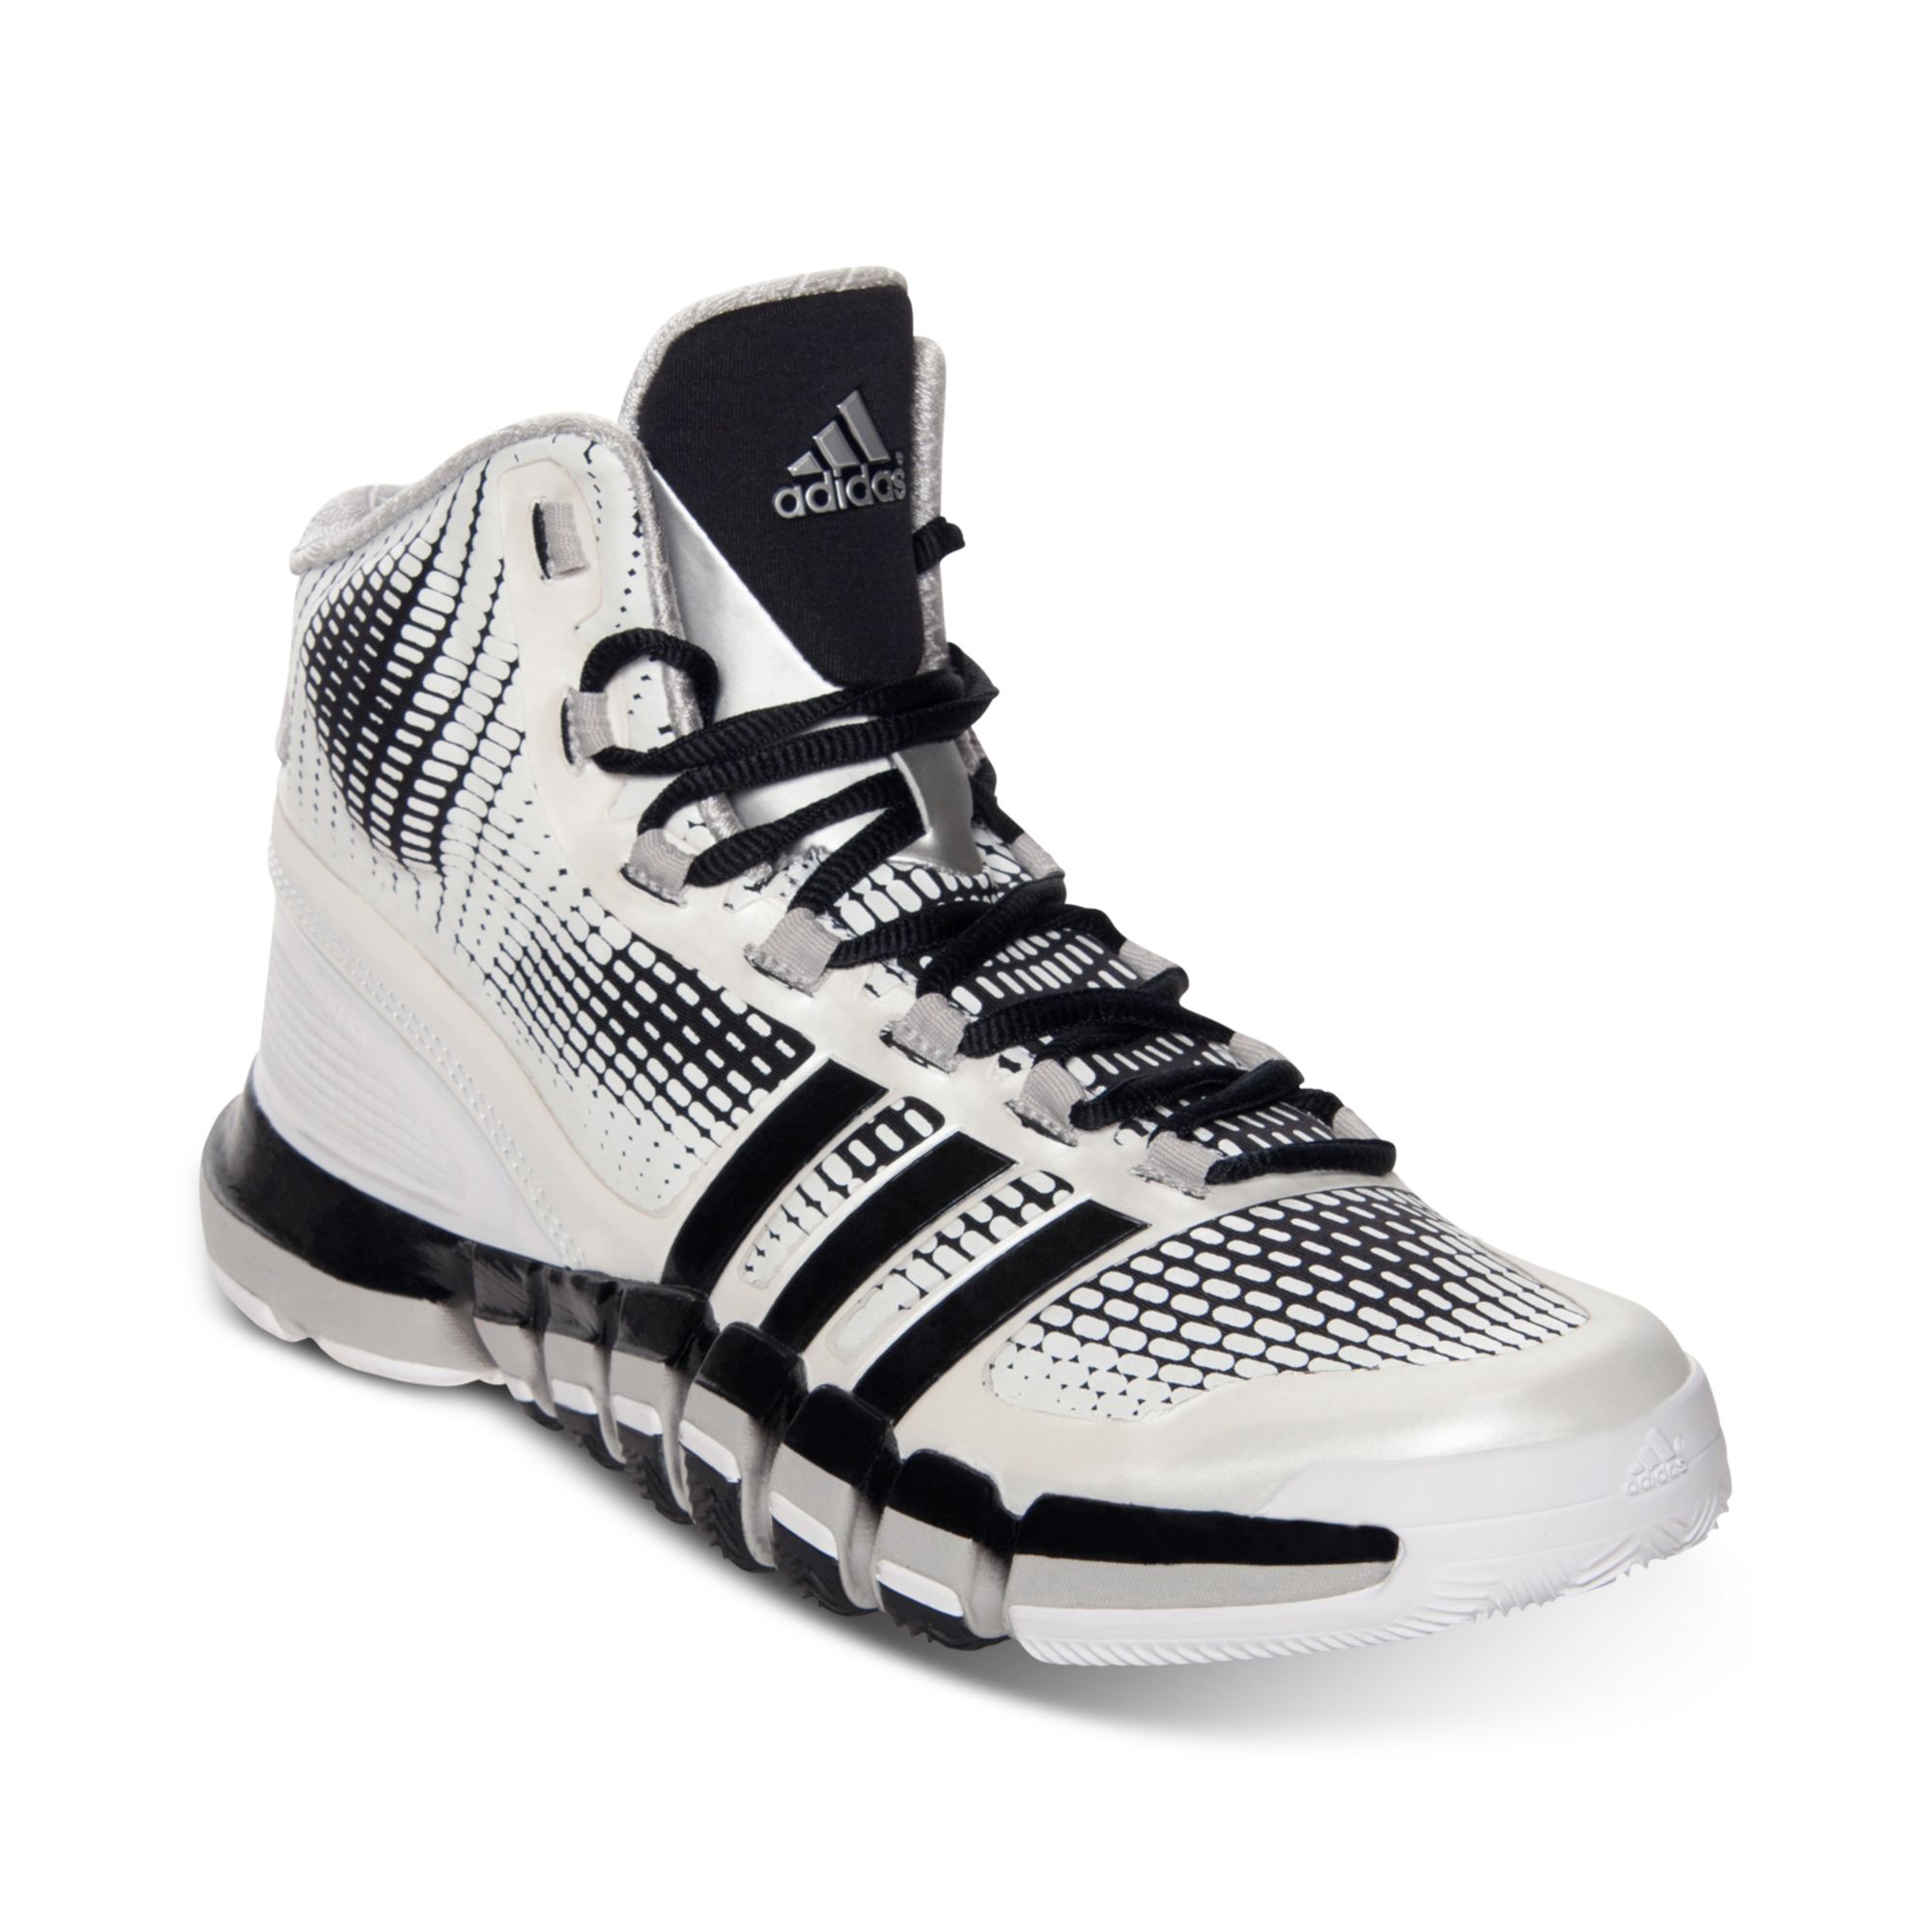 adidas crazyquick basketball shoes - 53 